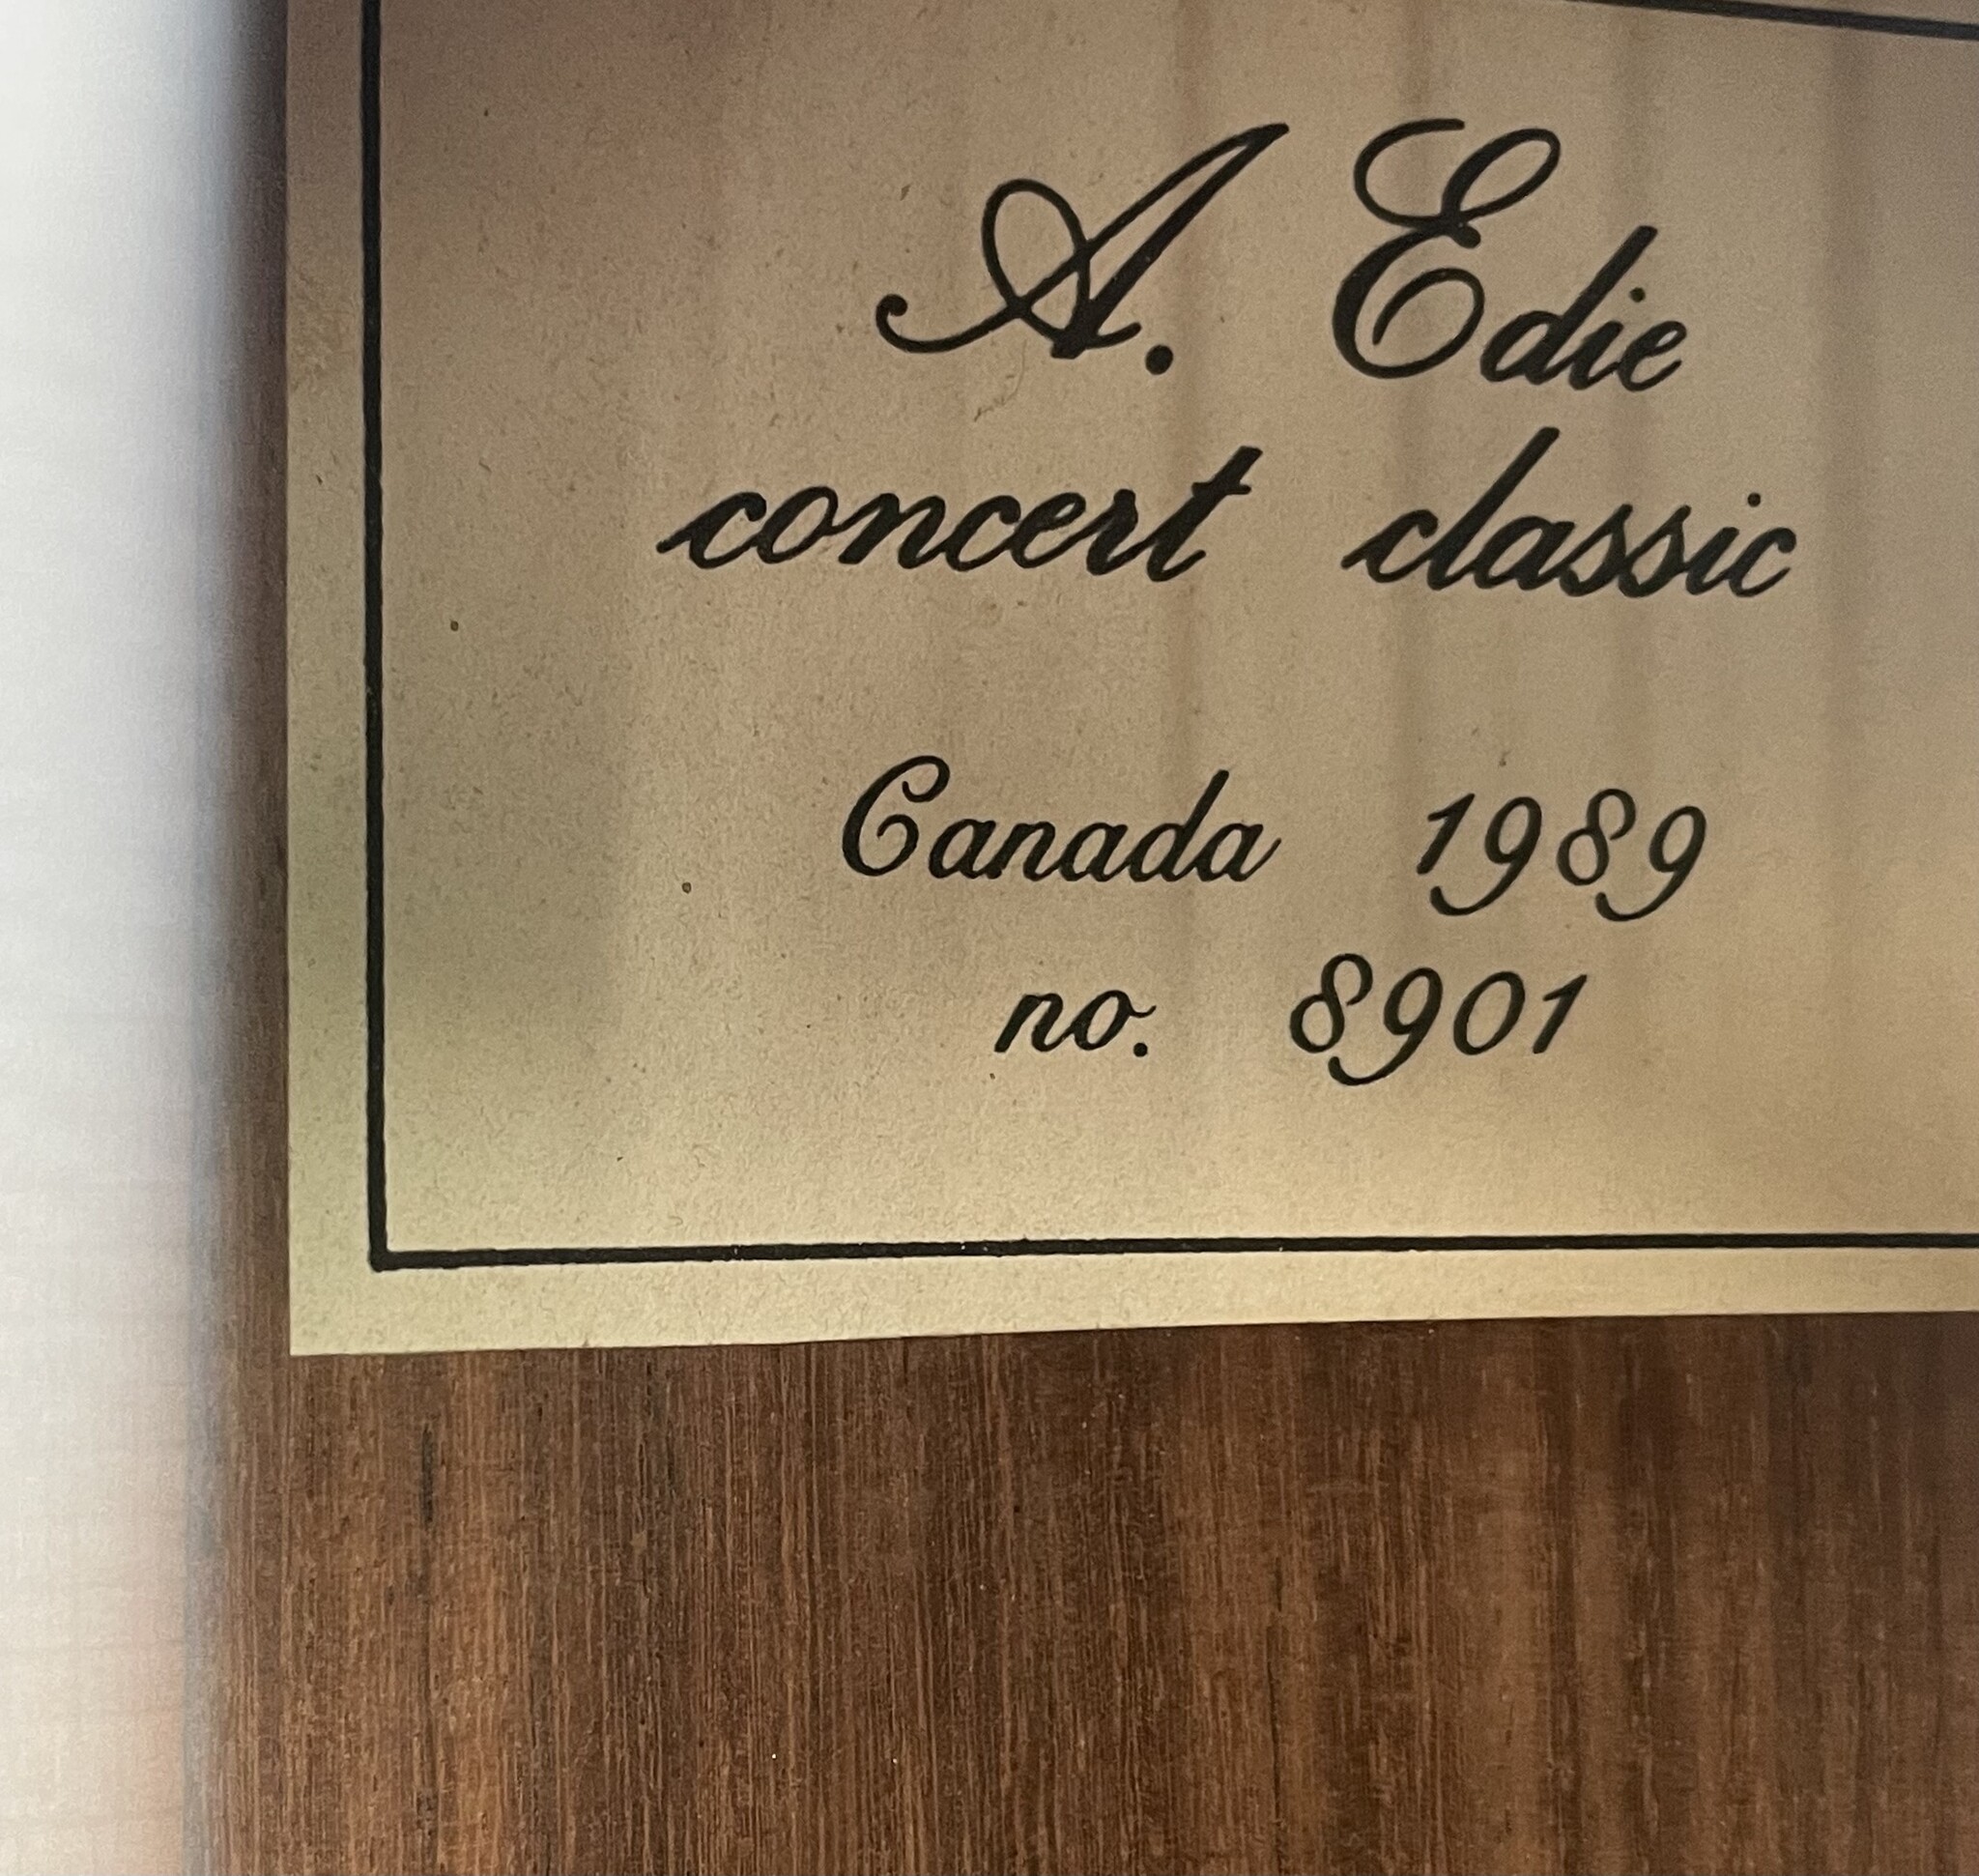 A. Edie A. Edie "Concert Classic" 1989 no. 8901